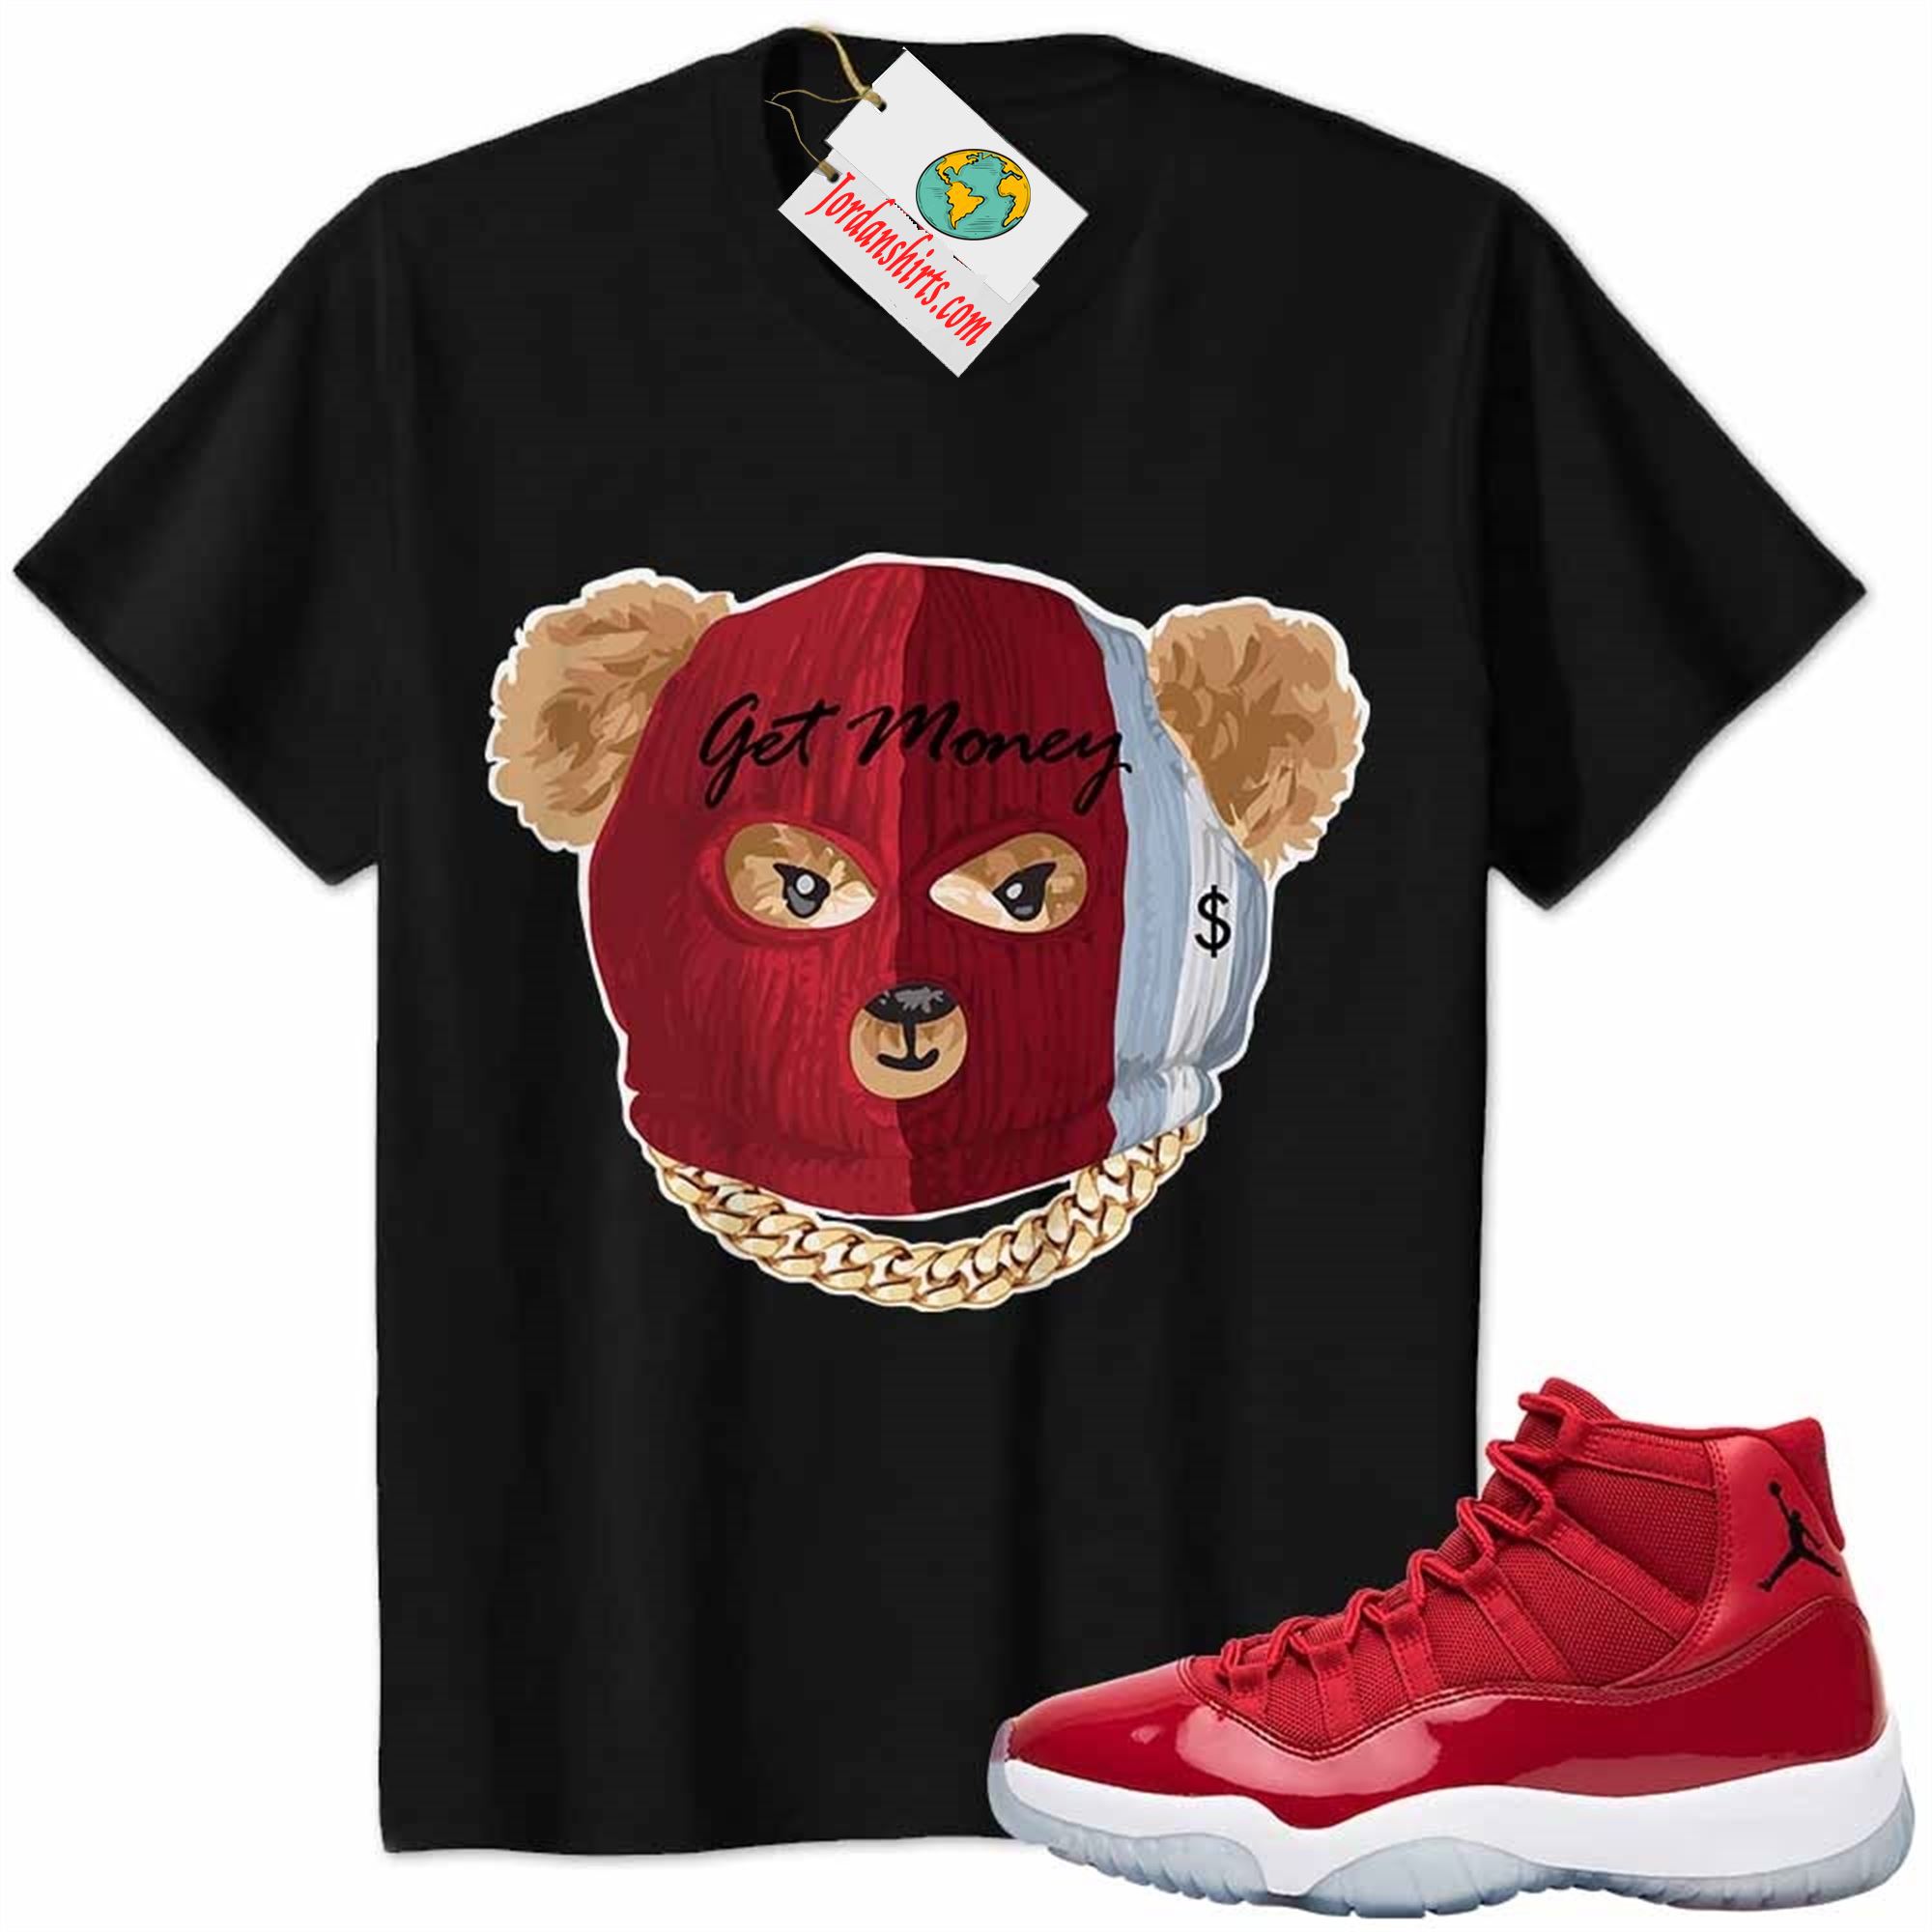 Jordan 11 Shirt, Robber Teddy Get Money Ski Mask Black Air Jordan 11 Gym Red 11s Size Up To 5xl